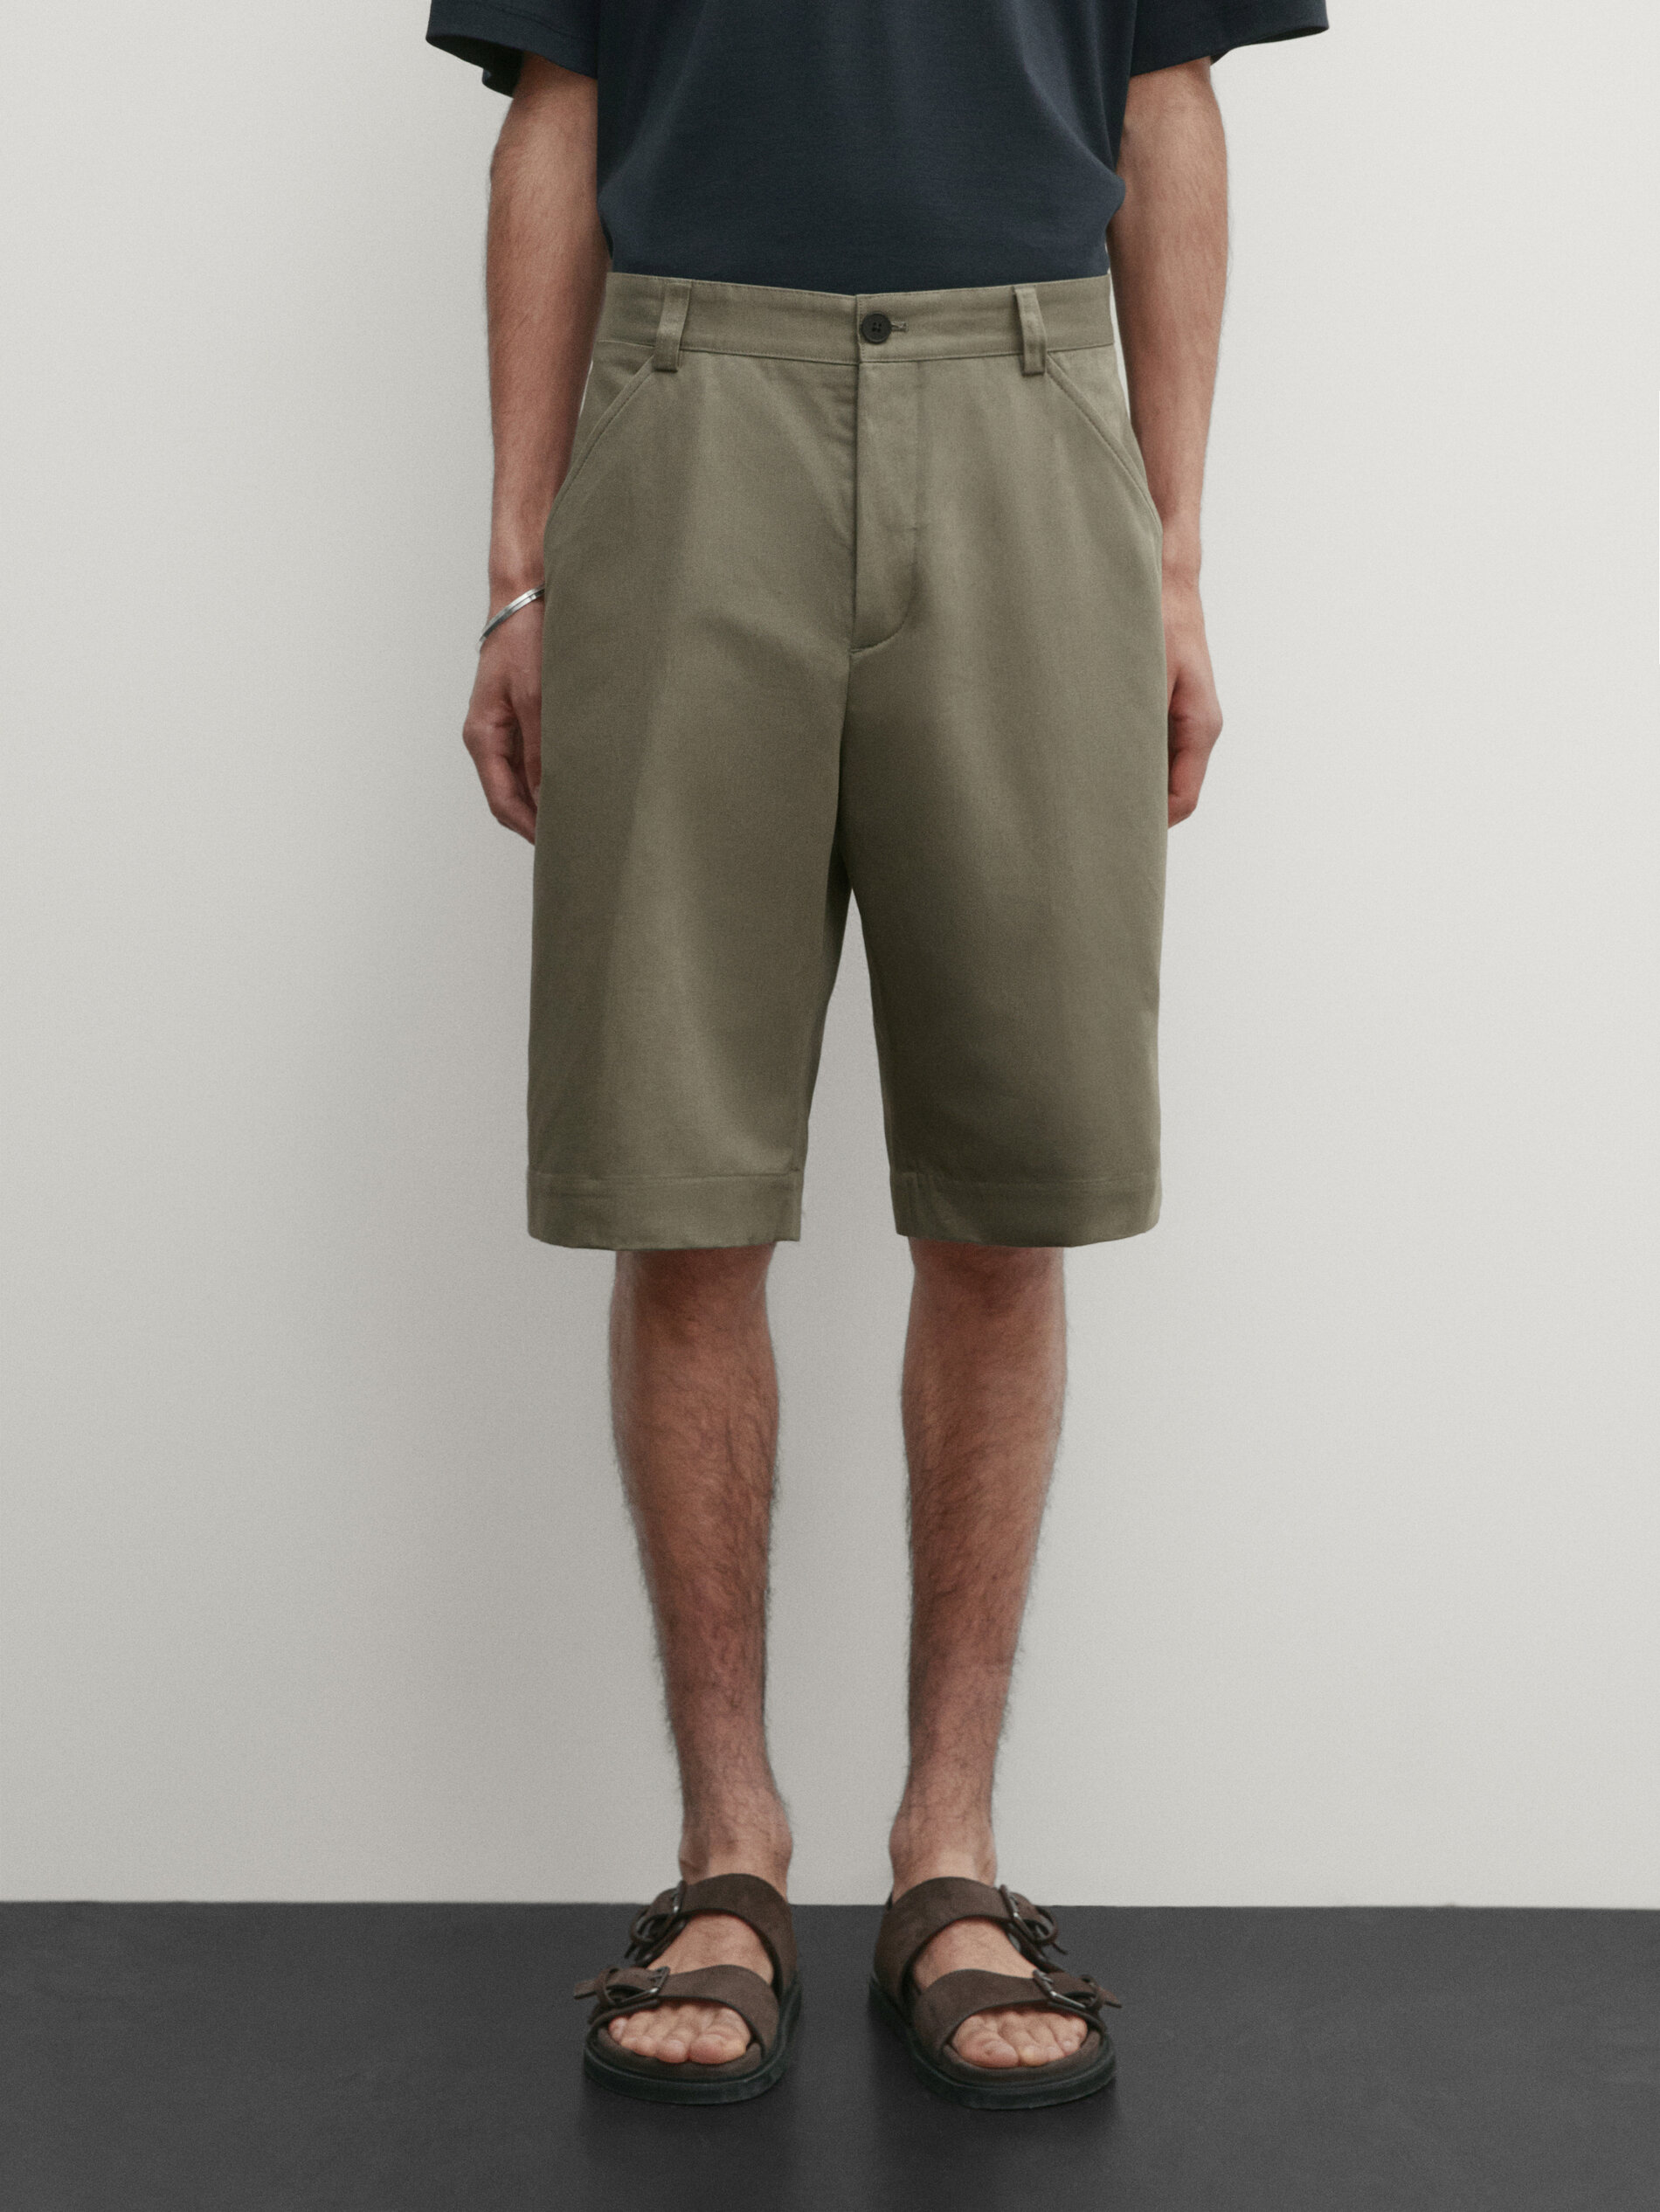 Cotton and linen blend bermuda shorts · Green, Sand · Dressy 